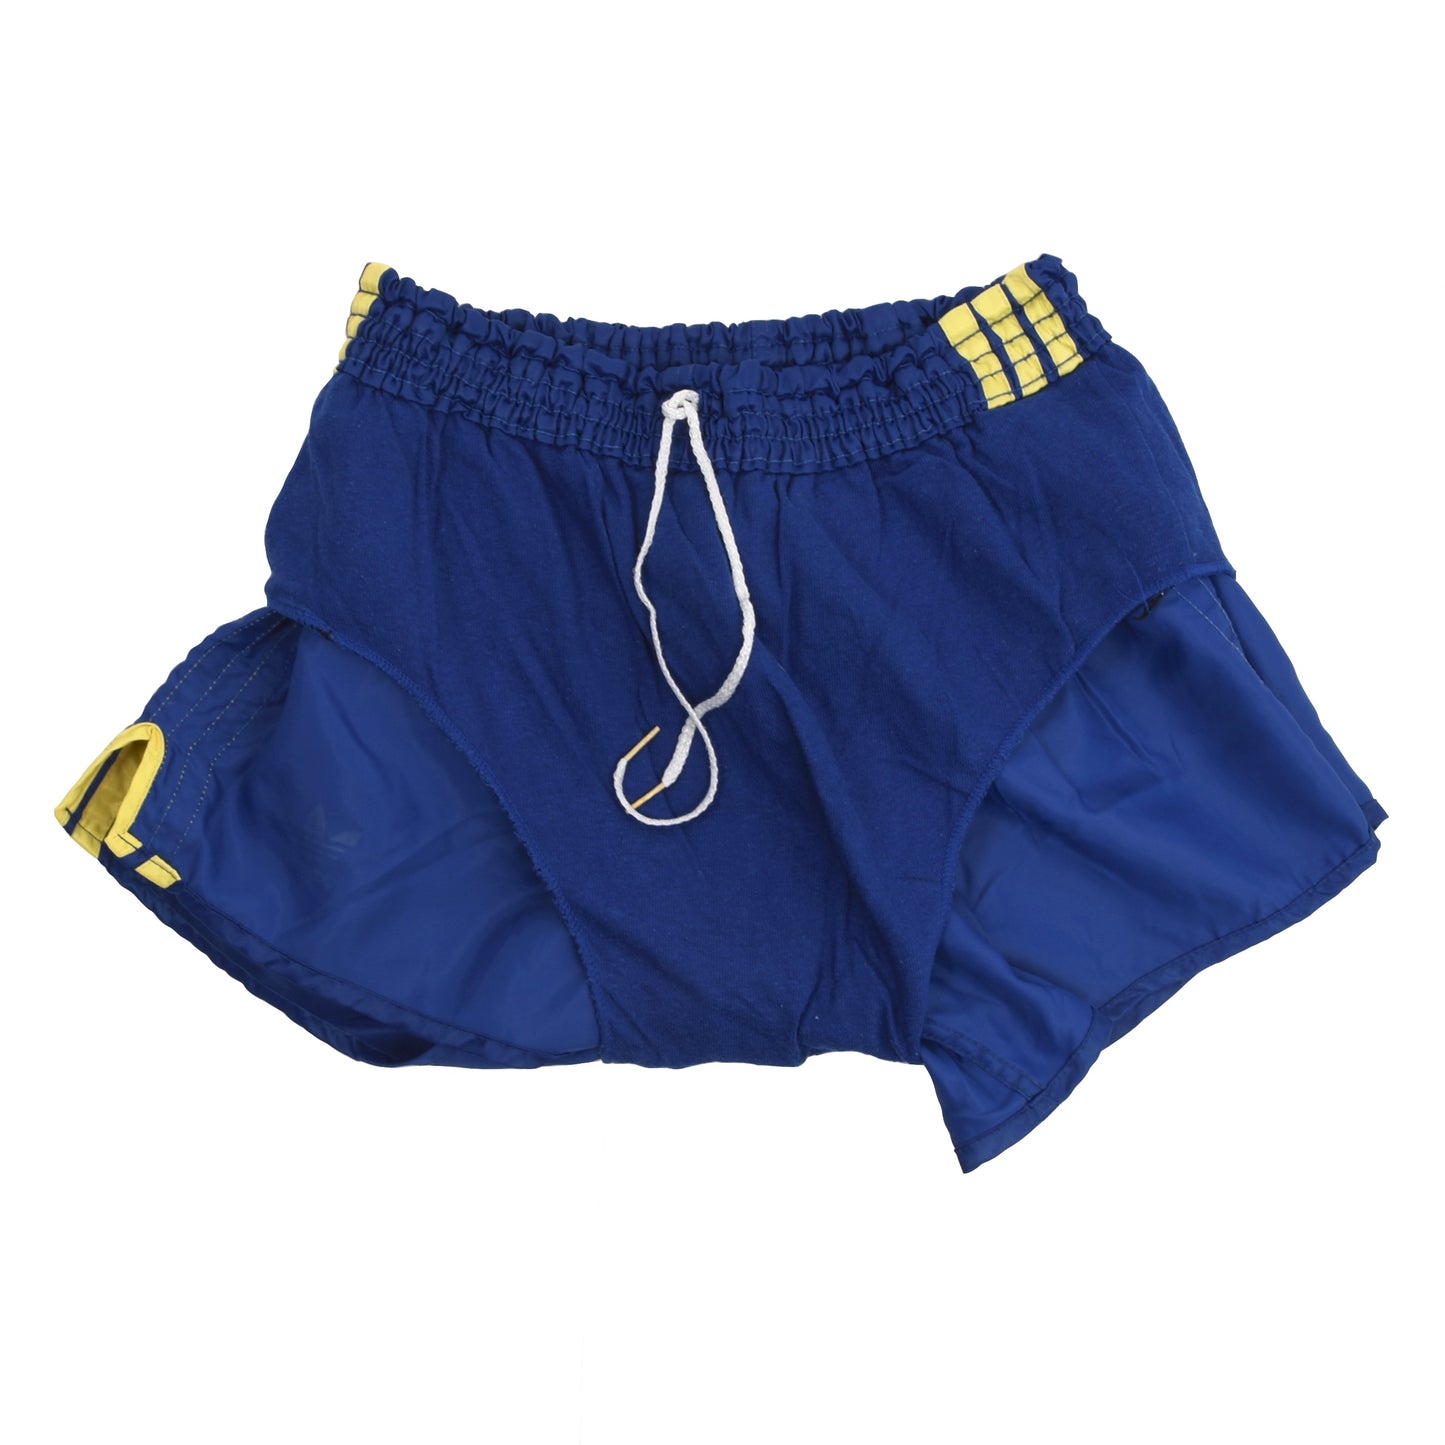 Vintage Adidas Sprinter Shorts Size D6 - Blue/Yellow